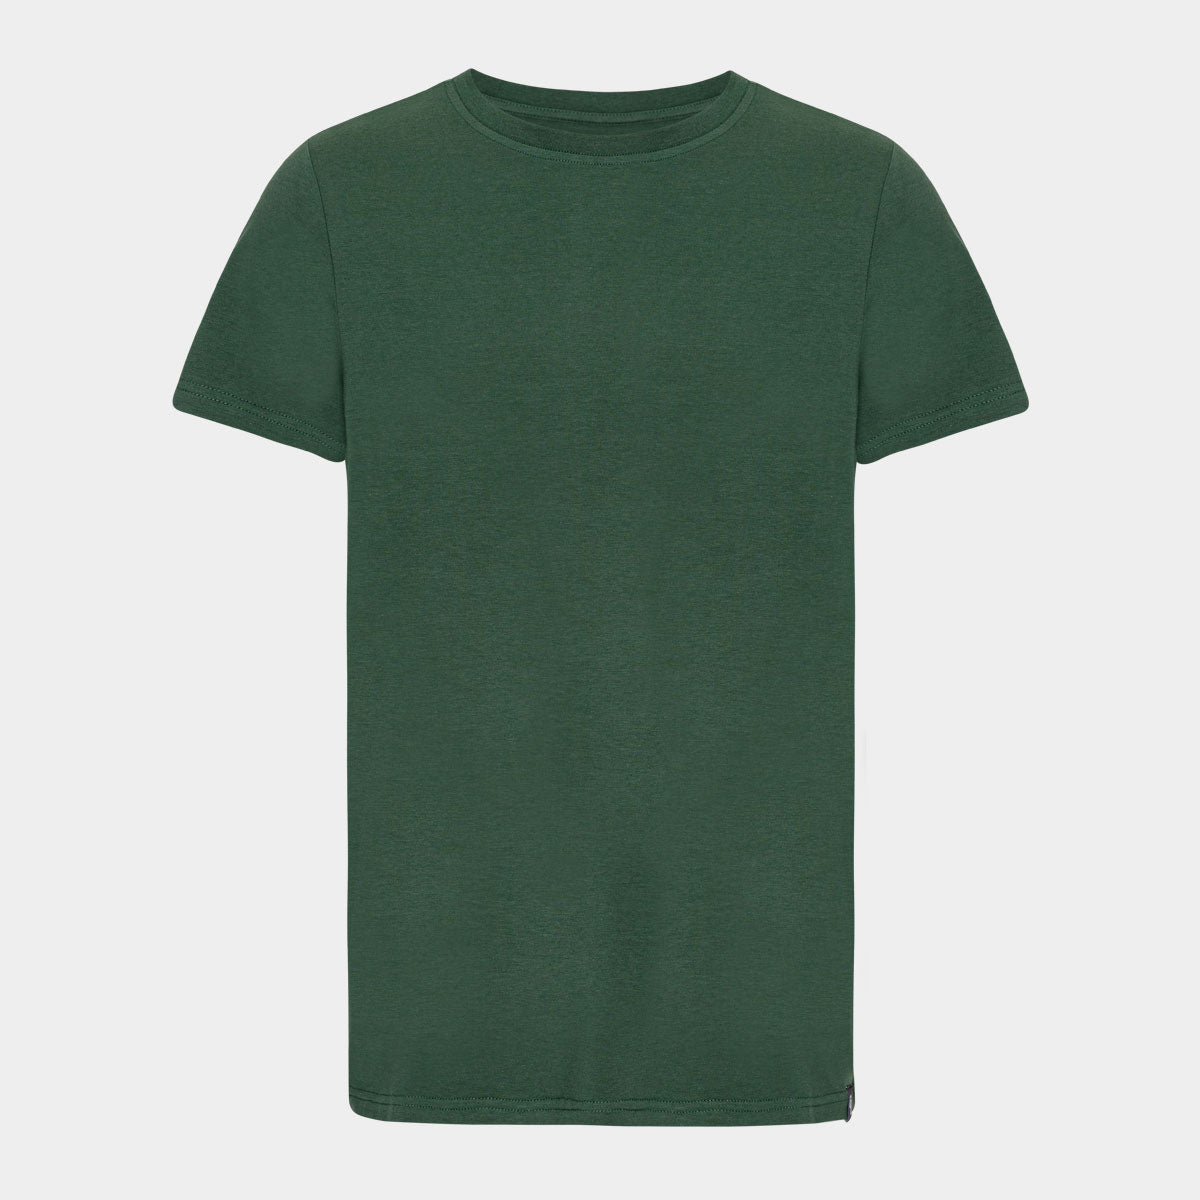 Se Mørkegrøn bambus T-shirt med crew neck til mænd fra Copenhagen Bamboo, XL hos Bambustøj.dk